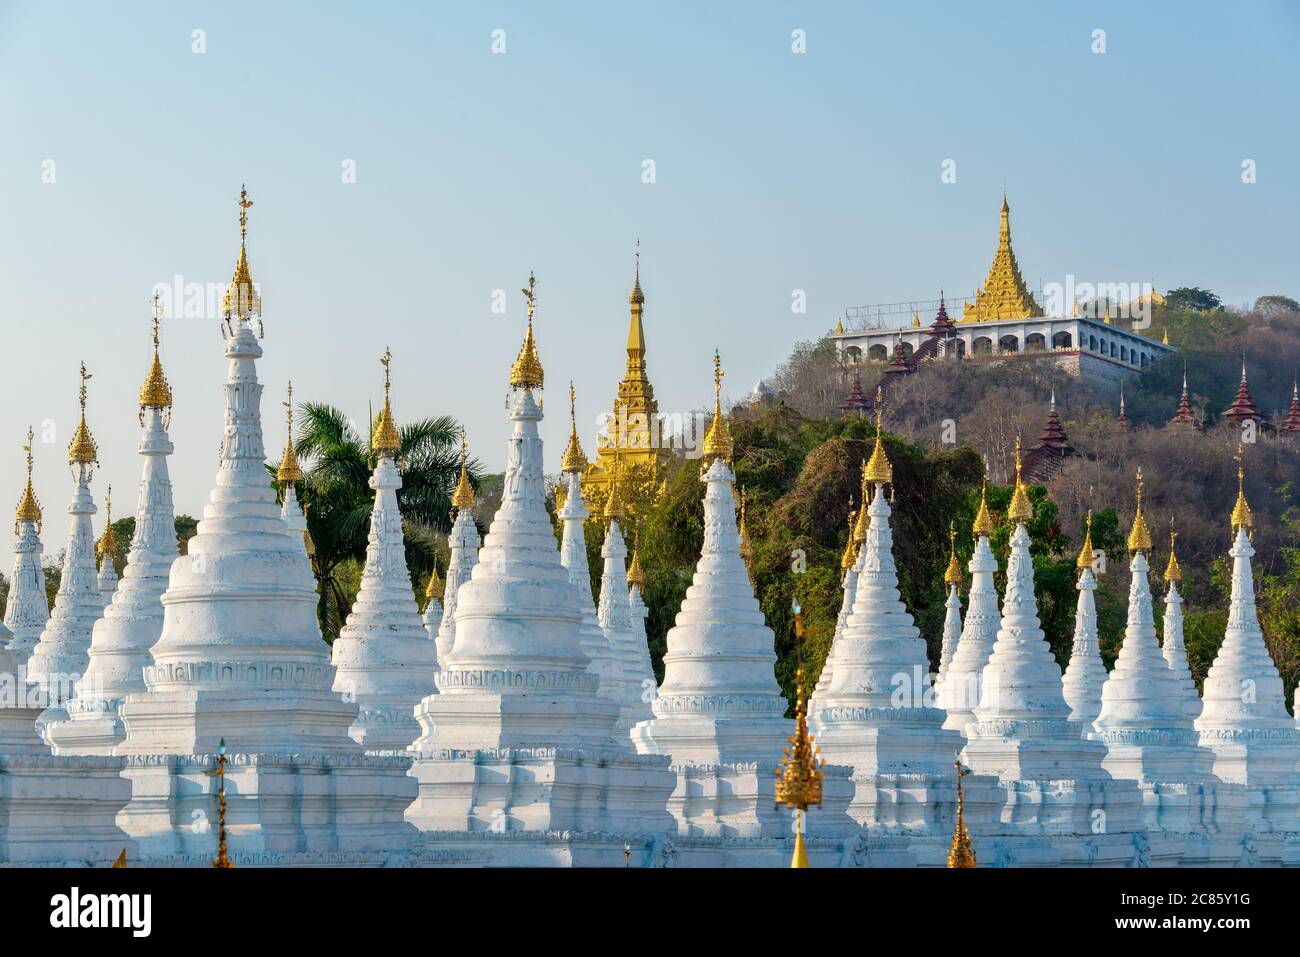 White stupas of Sanda Muni Pagoda in Mandalay, Burma Myanmar Stock Photo